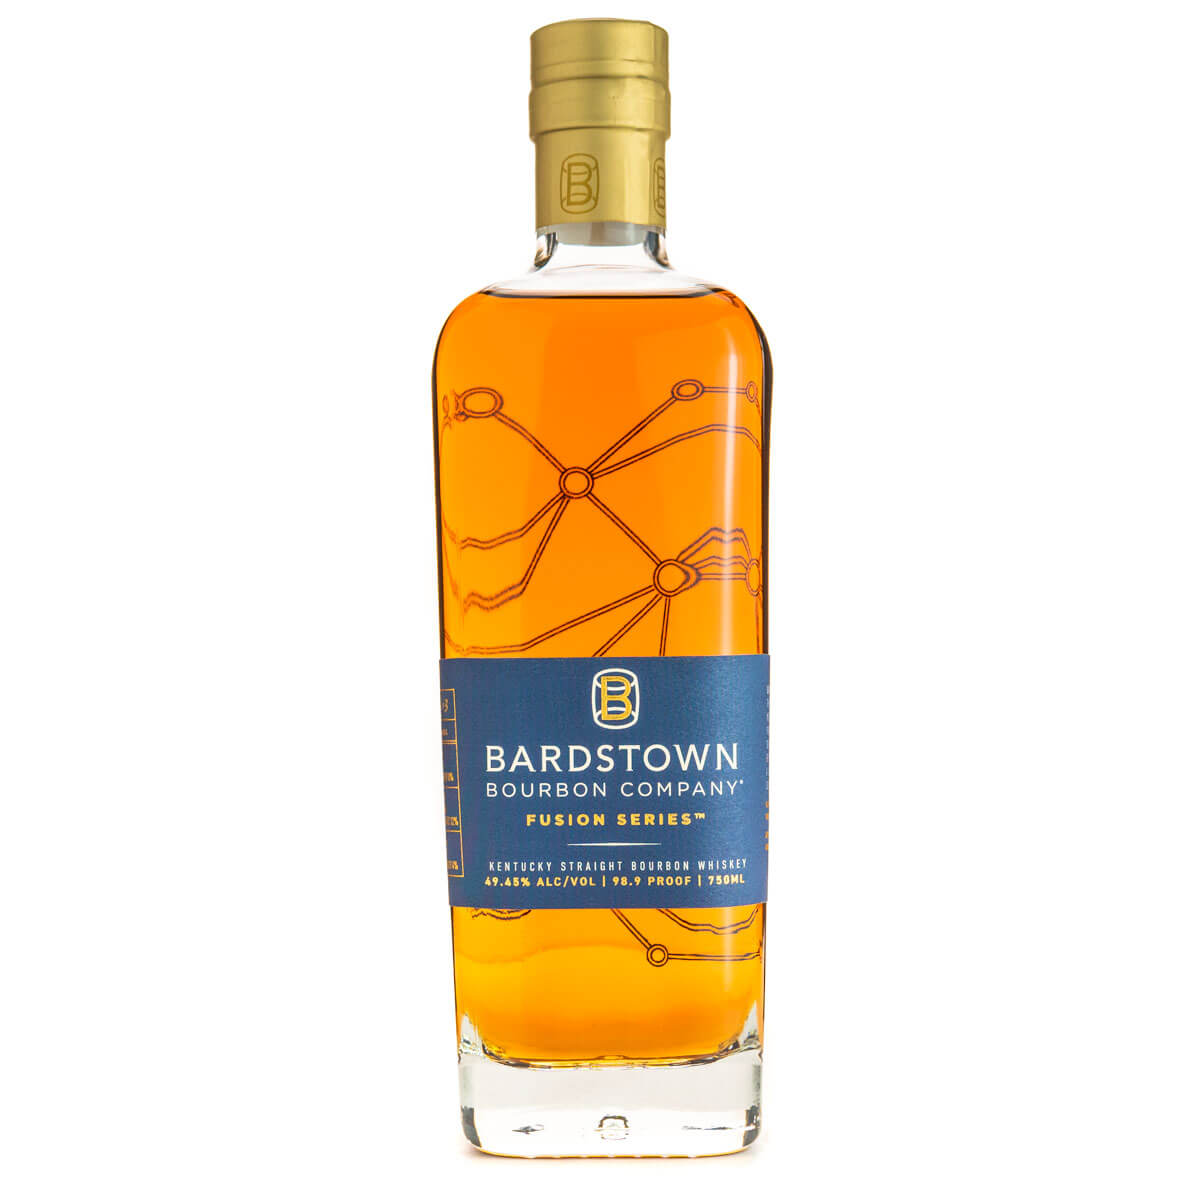 Bardstown Bourbon Company Fusion Series bottle